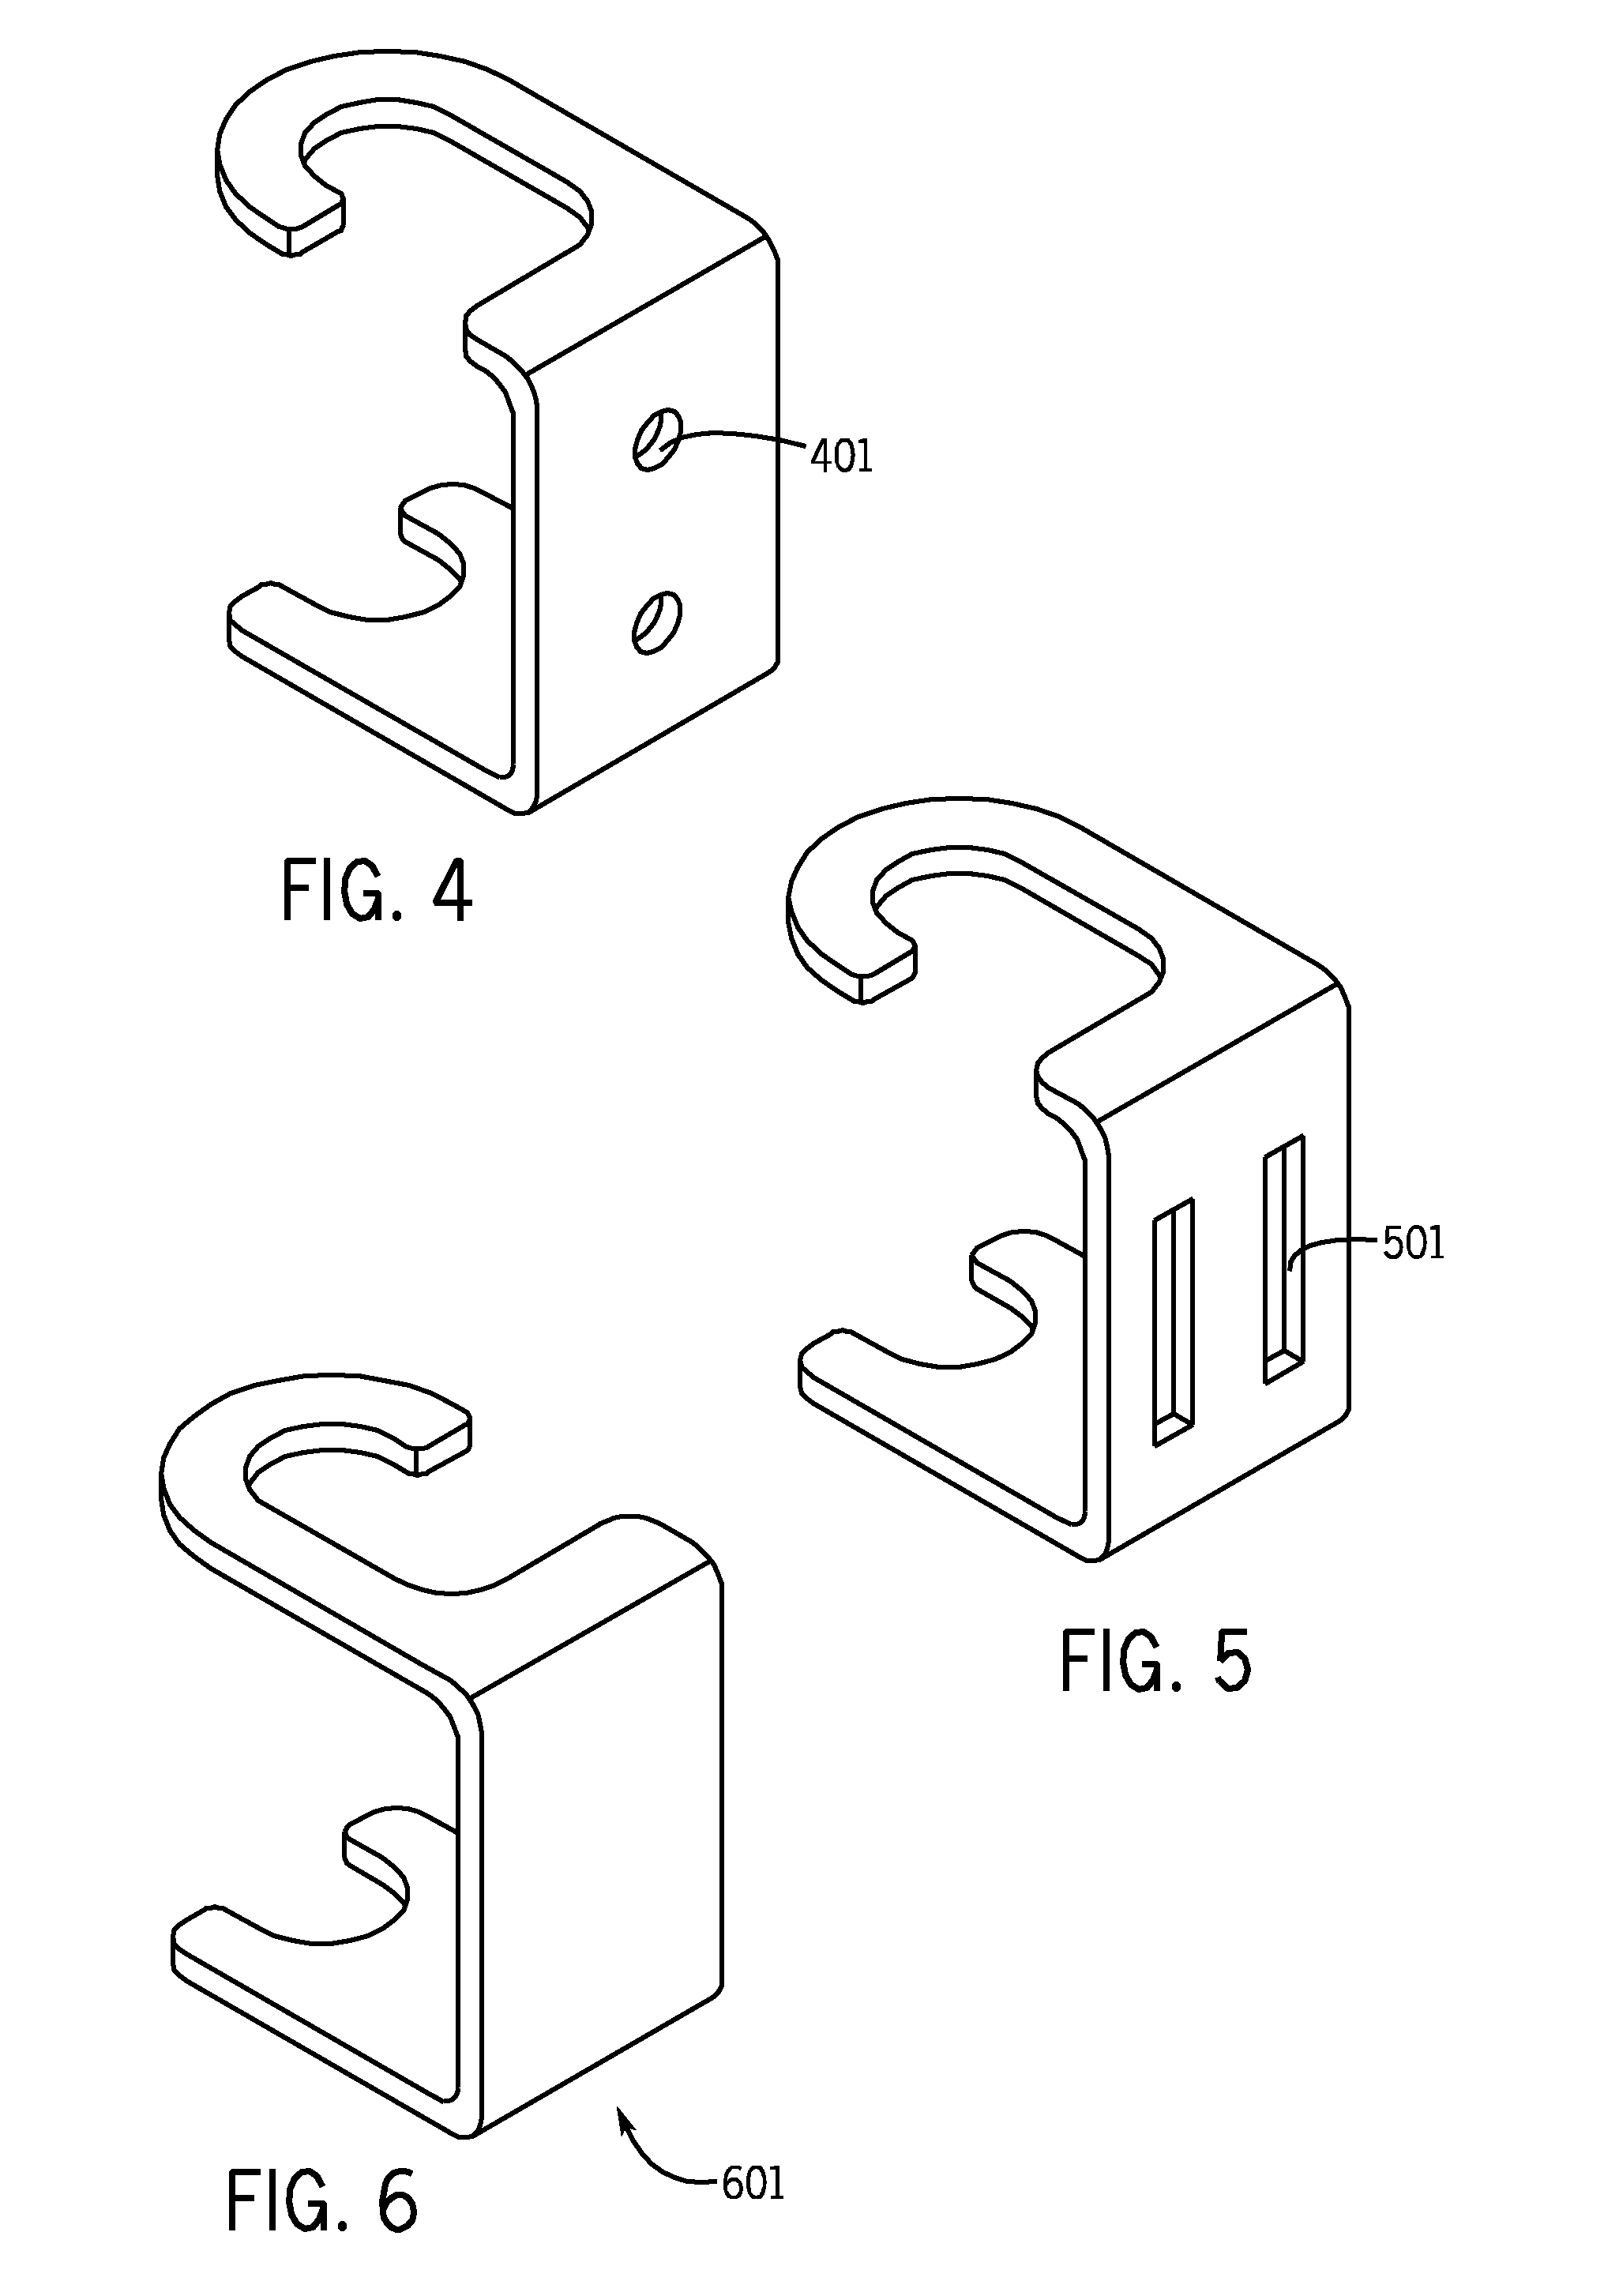 User adjustable coupling device or hinge